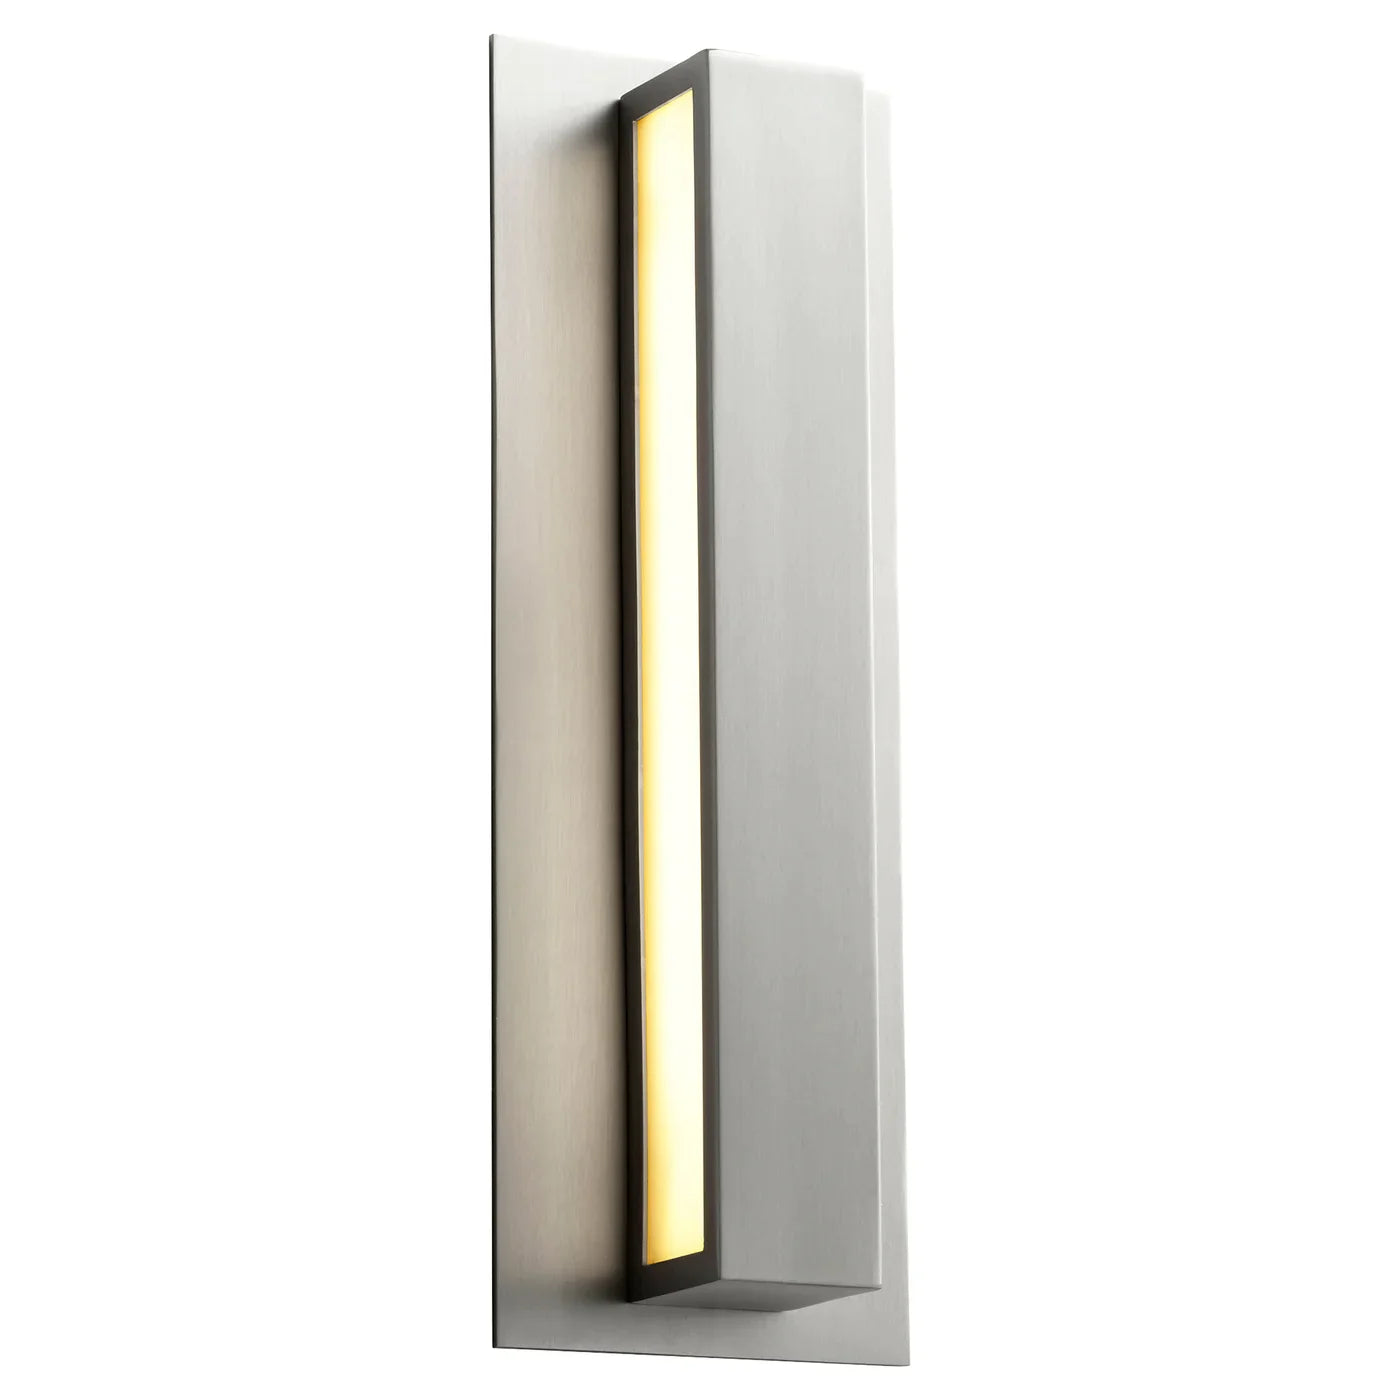 Oxygen Alcor 3-532-24 Wall Sconce LED Light Fixture, ADA Compliant - Satin Nickel